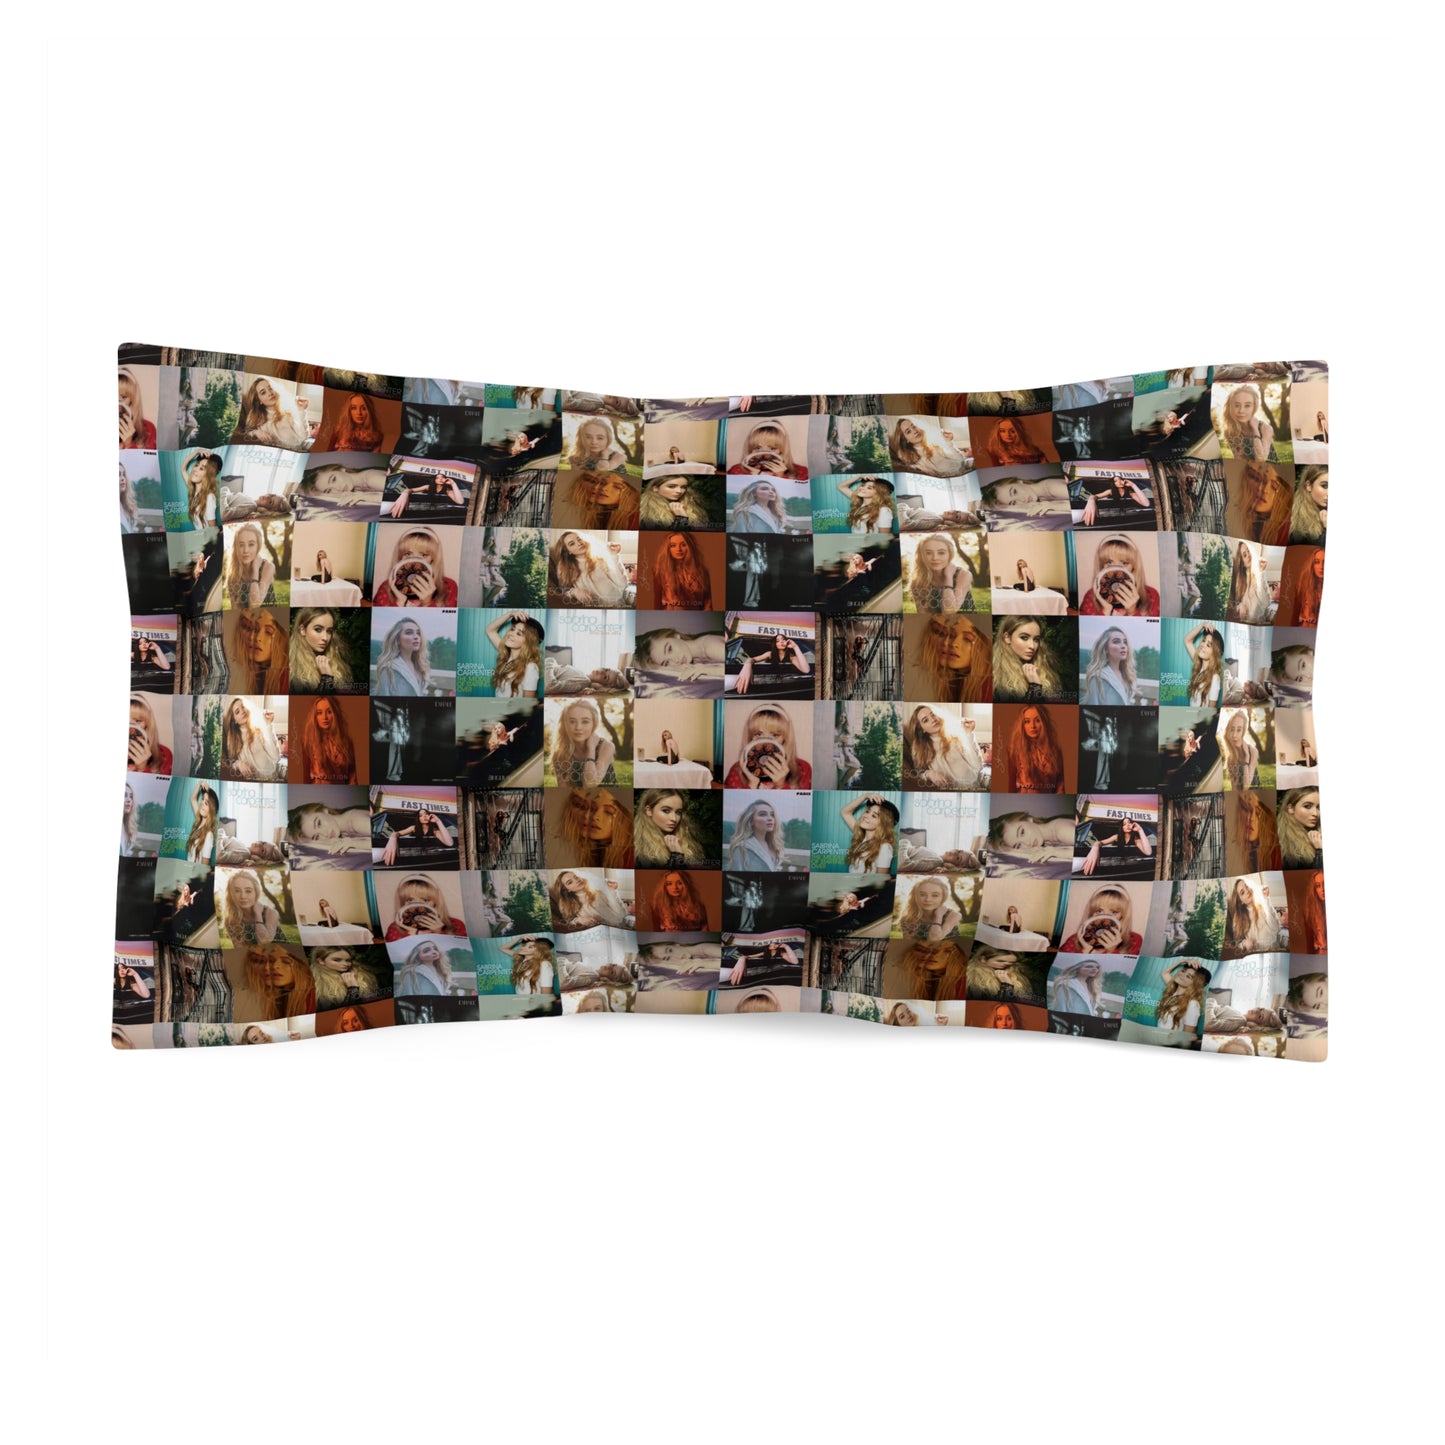 Sabrina Carpenter Album Cover Collage Microfiber Pillow Sham